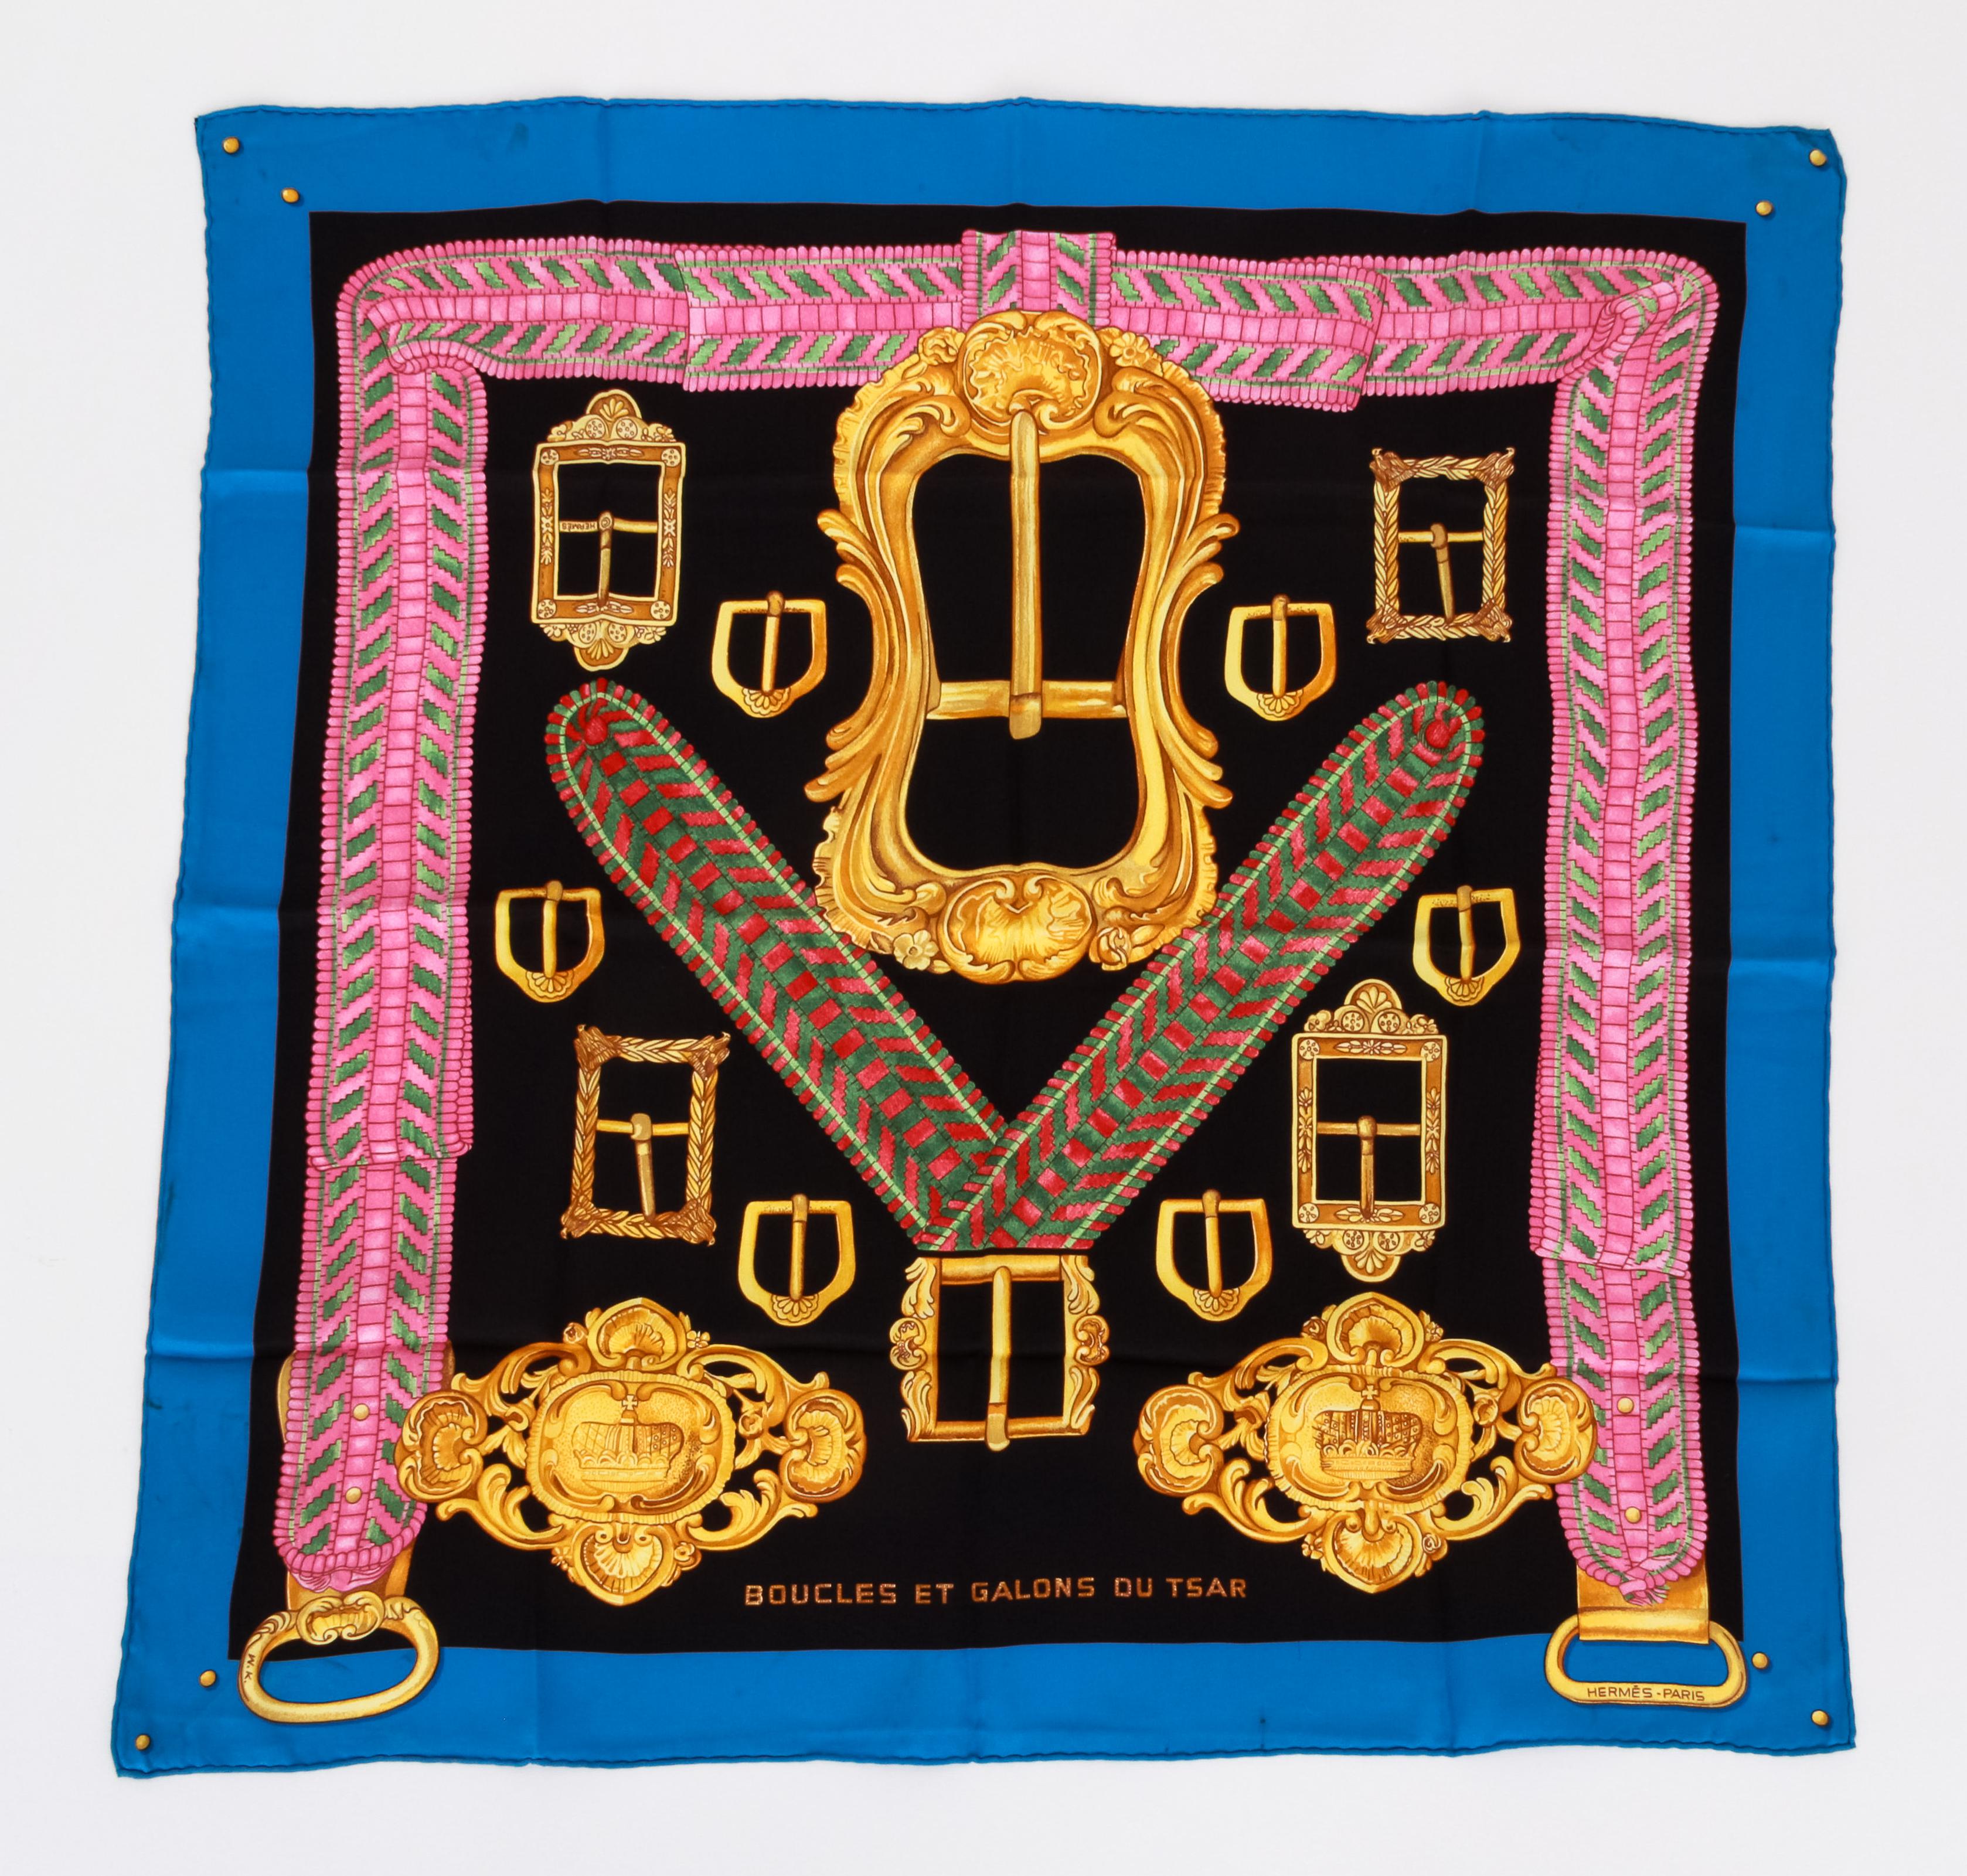 Echarpe en soie moyenne Hermes boucles et galon du Tsar. Bleu, noir, jaune et rose.
26 x 26